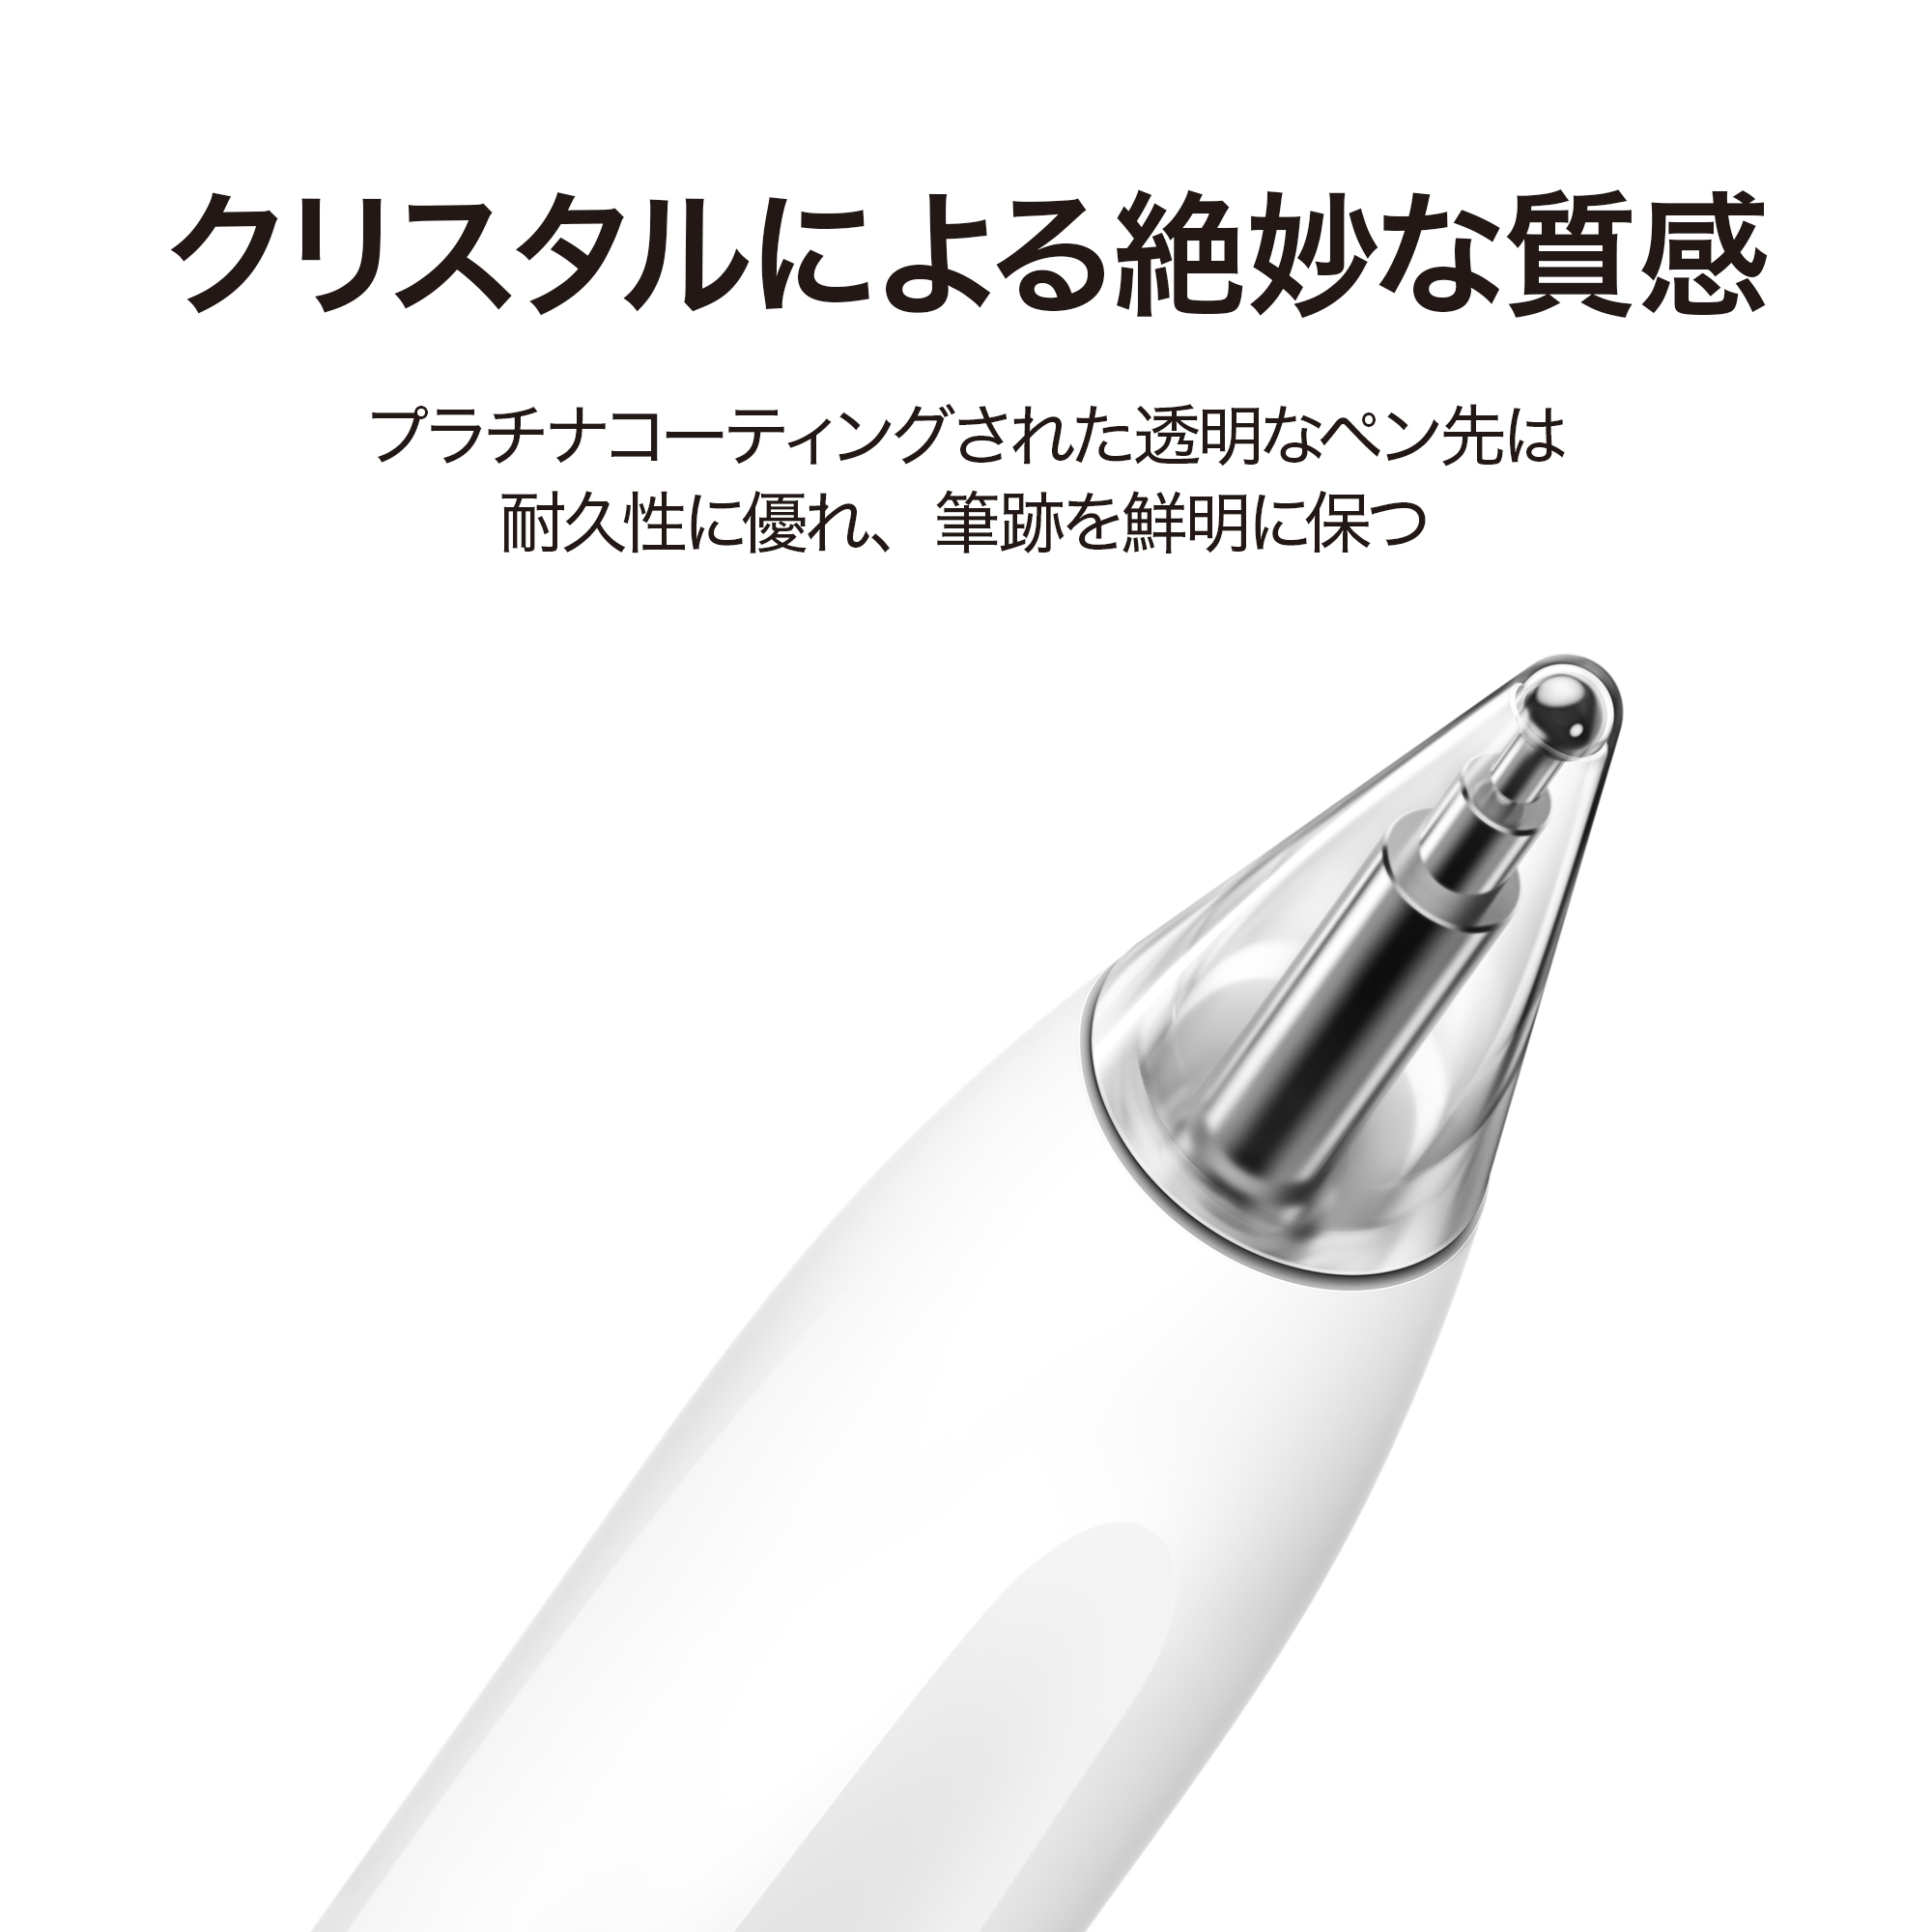 HUAWEI M-pencil 第2世代(HUAWEI MatePad 11.5"対応) 純正 pencil ※BonusStore5